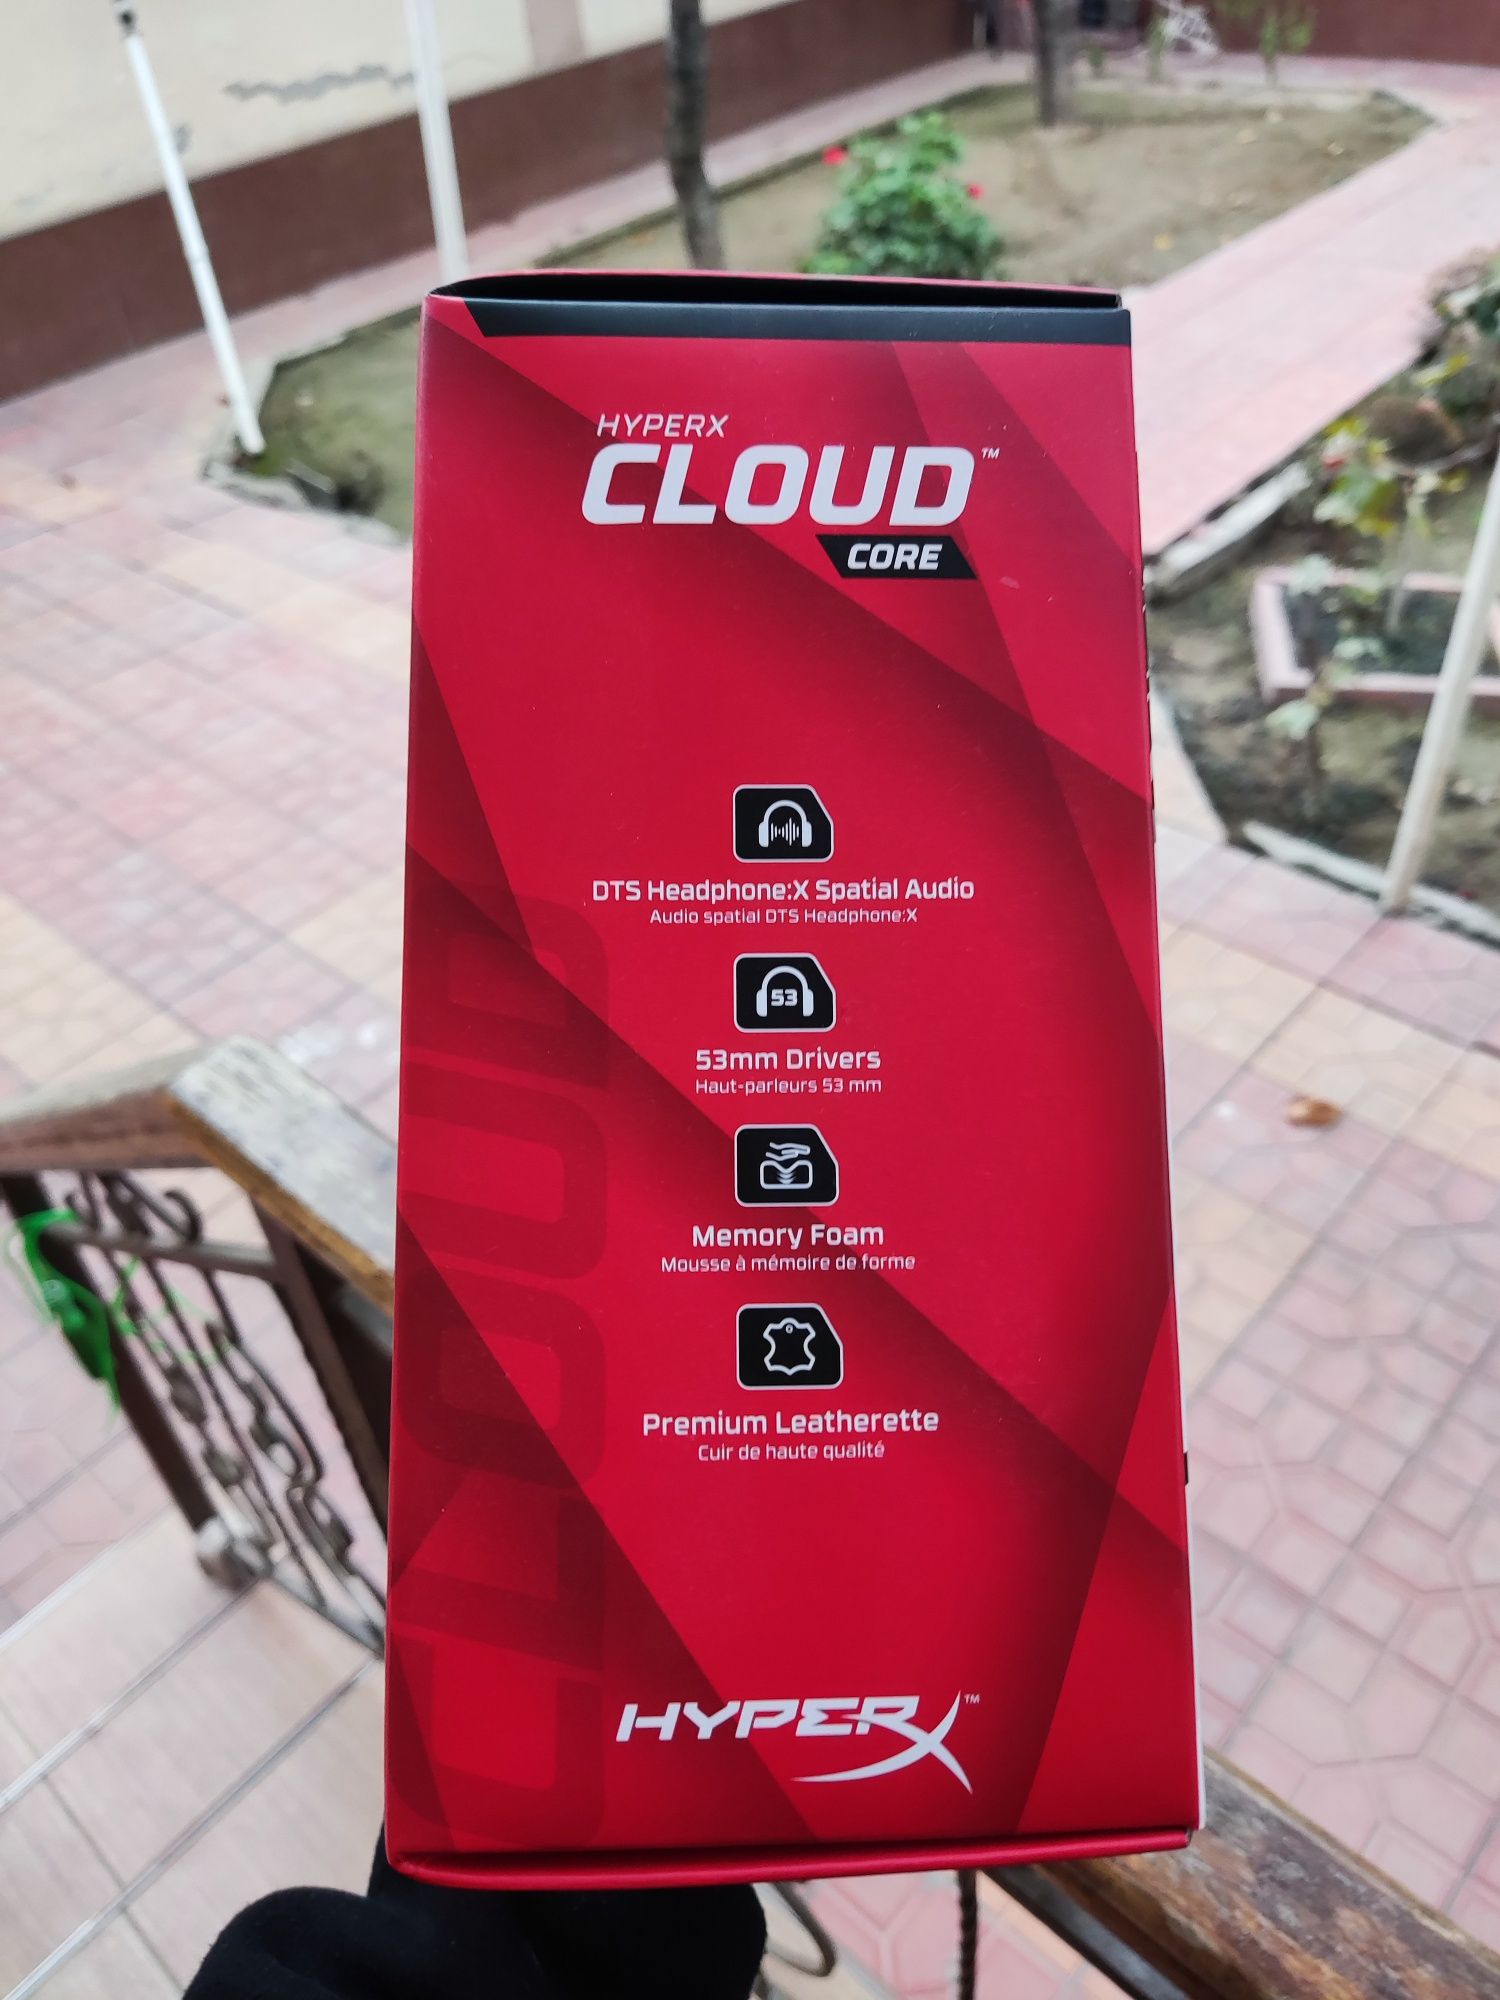 Hayperx cloud core